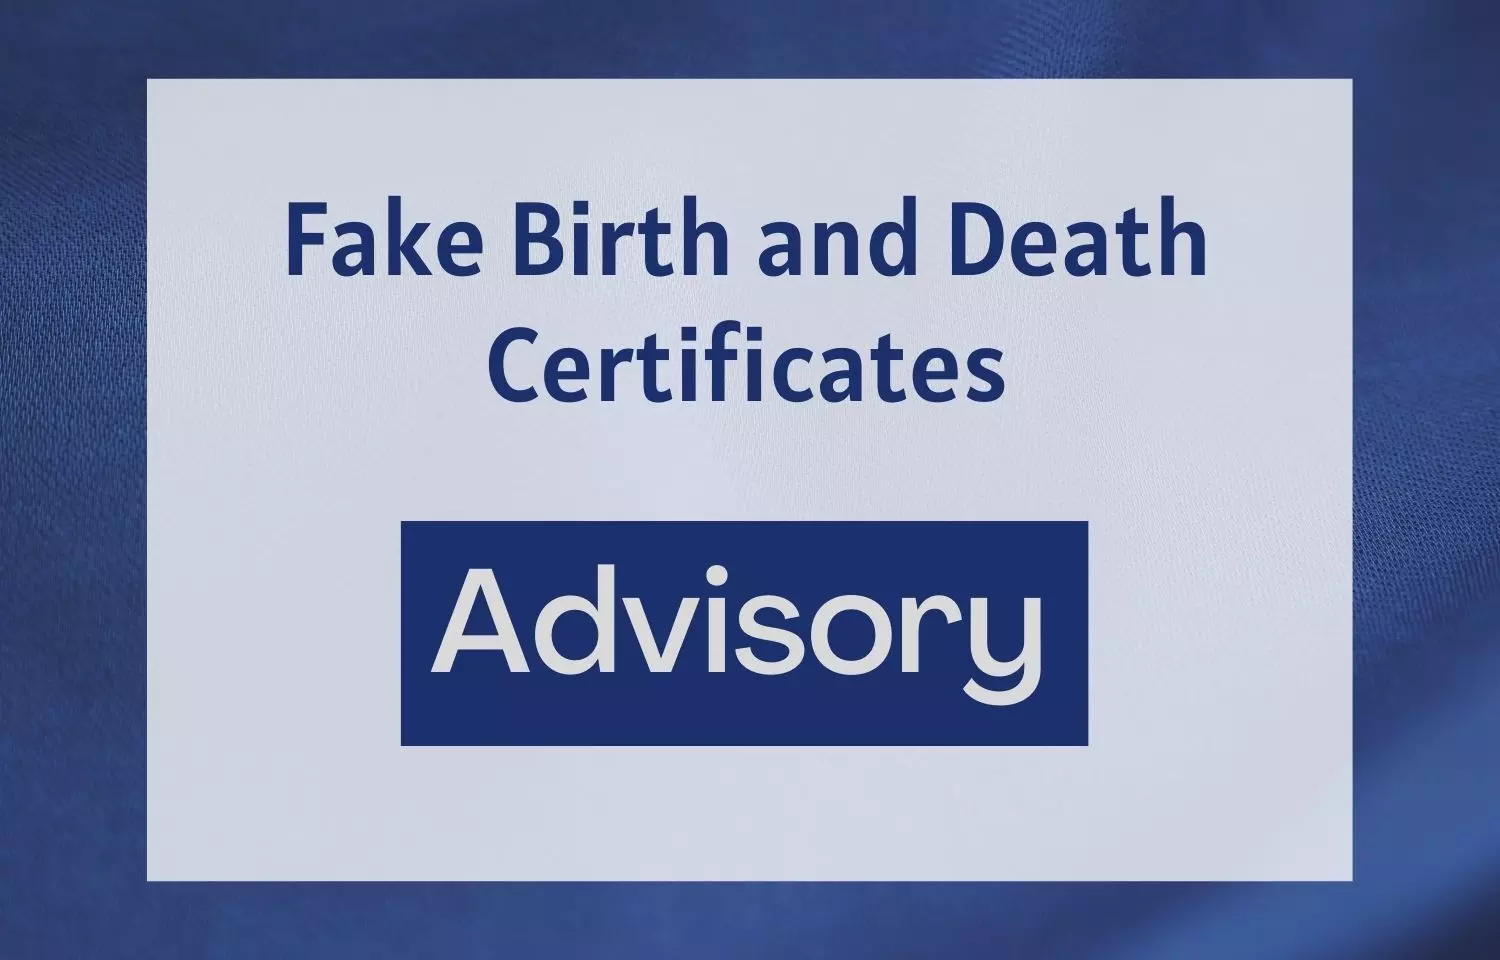 Haryana govt releases advisory against fake websites on birth, death certificates